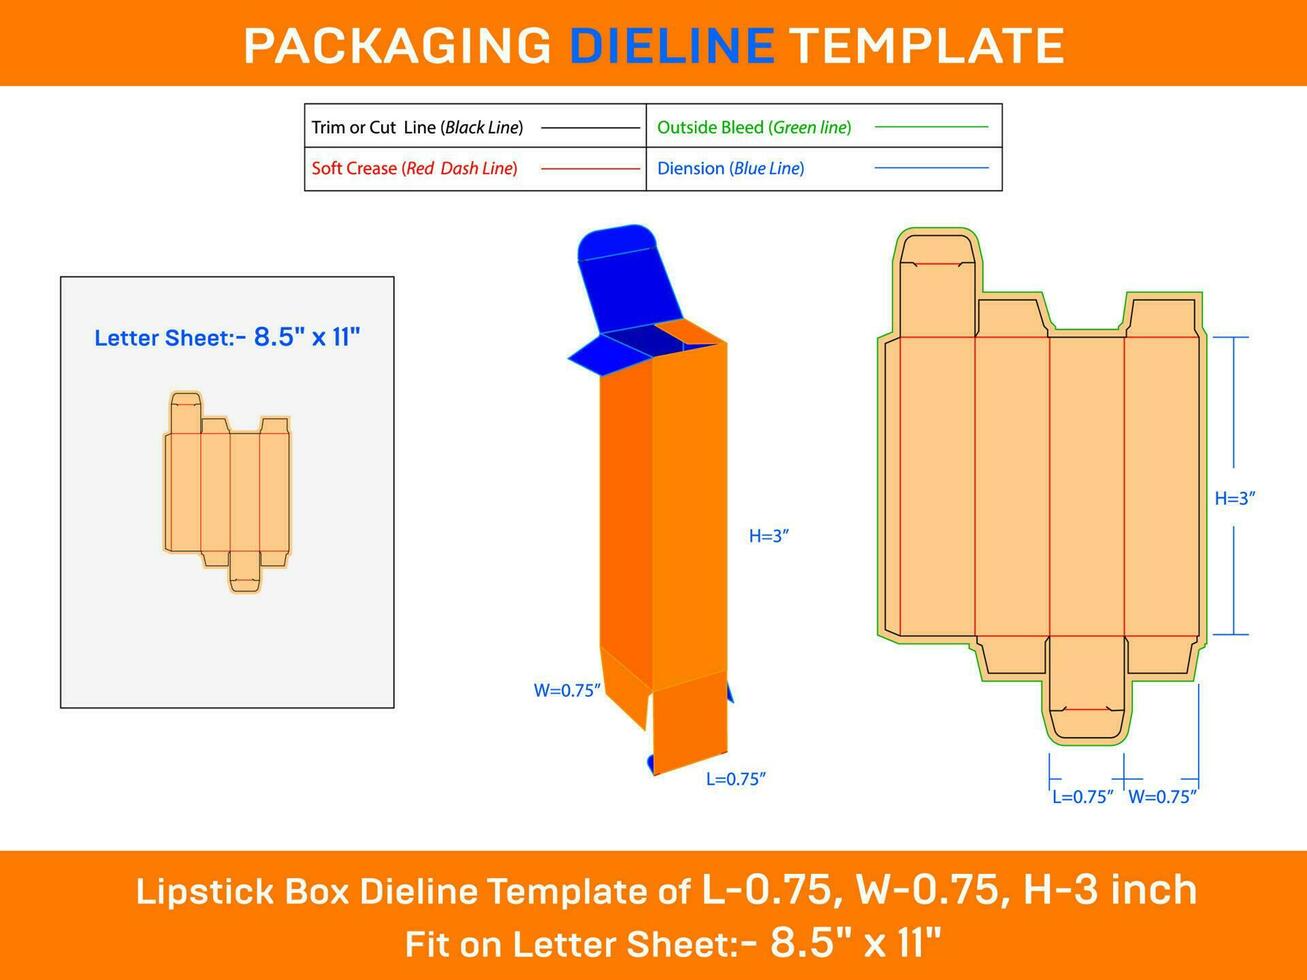 Custom Lipstick Box Dieline Template L 0.75xW 0.75xH 3 inch vector